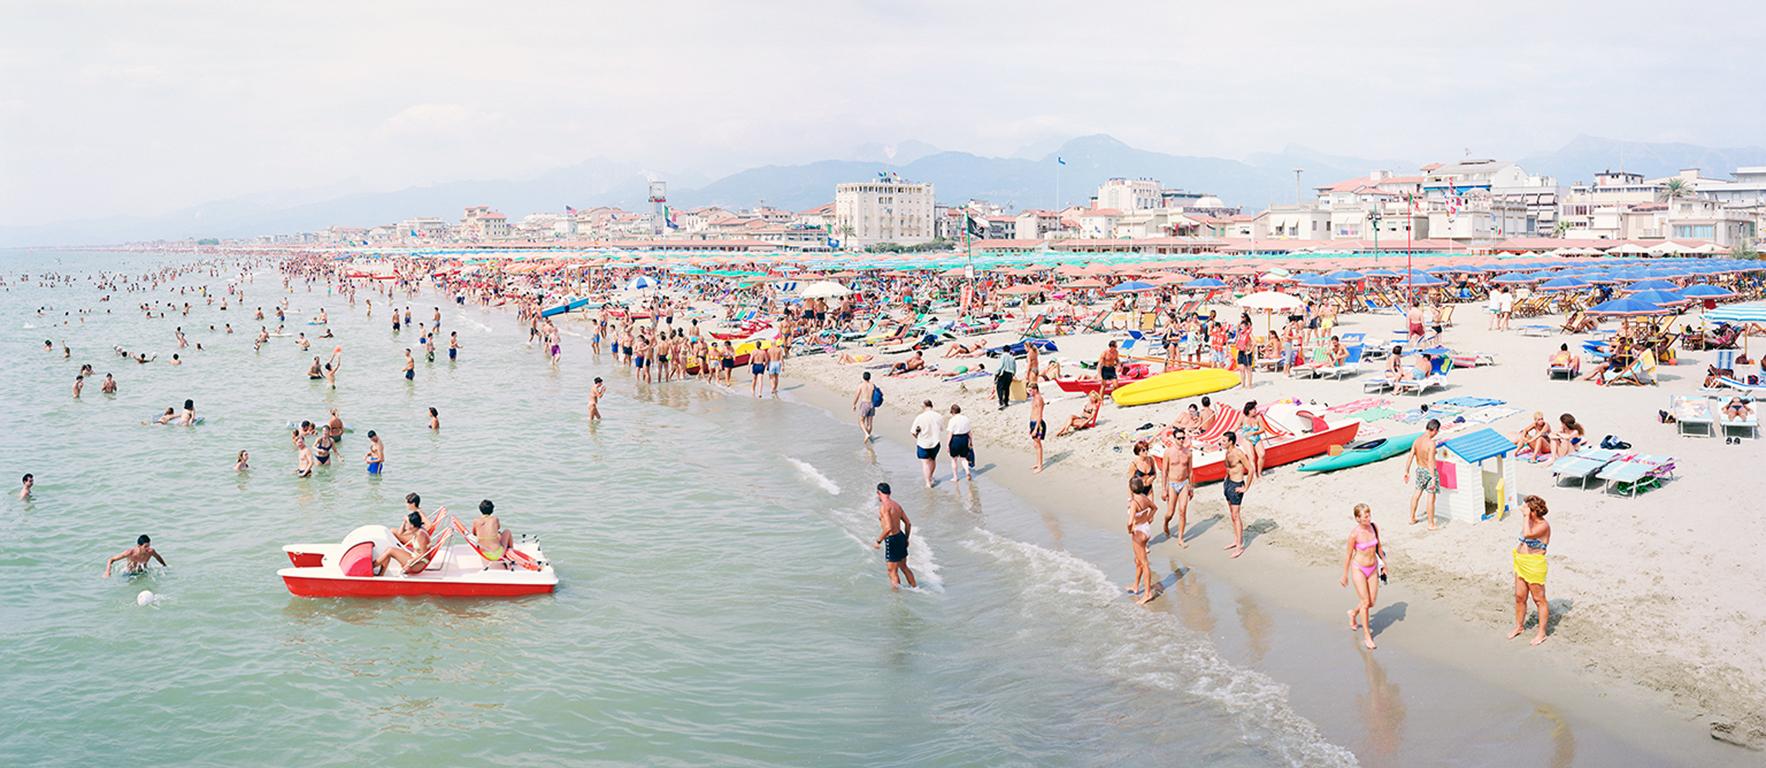 Viareggio Pano (encadré) - photographie panoramique unique de plage méditerranéenne 